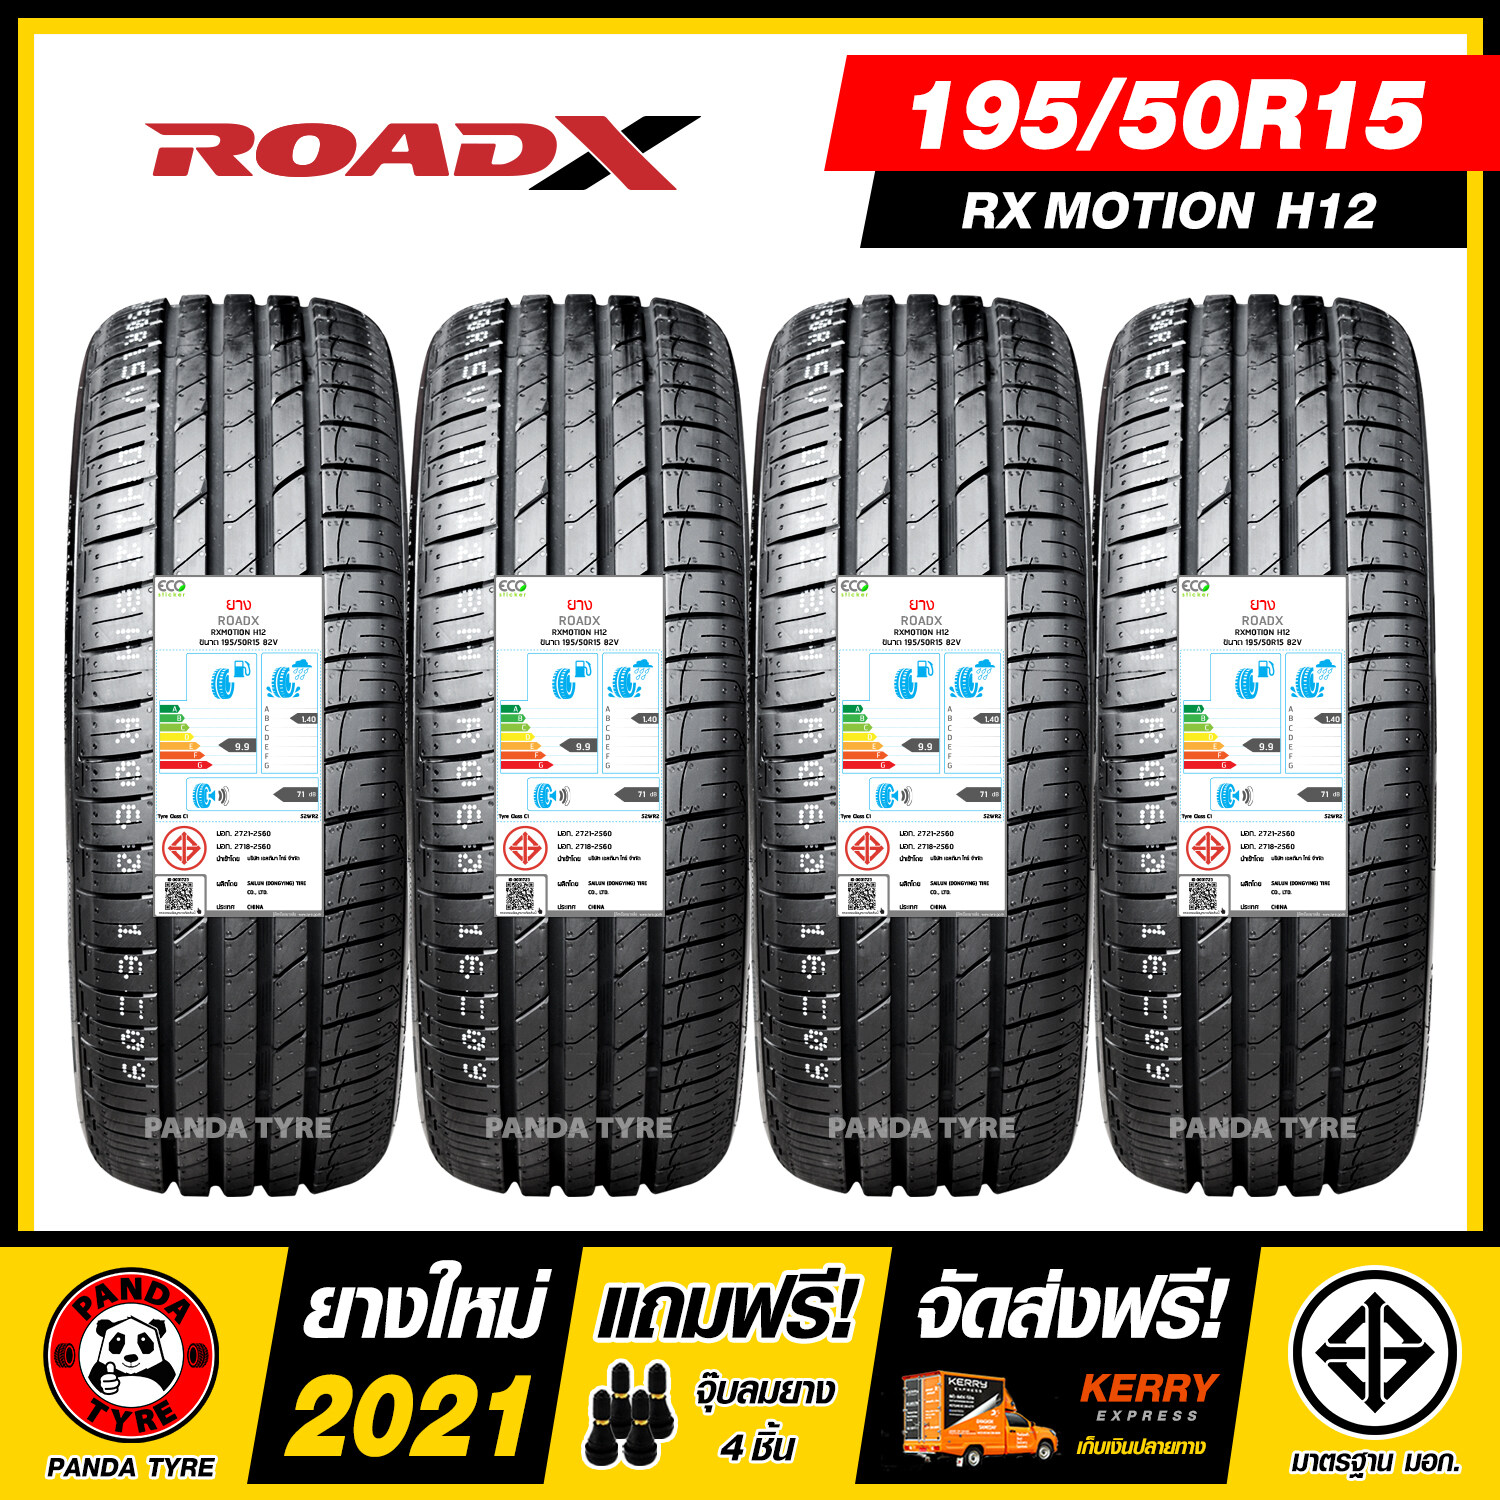 ROADX 195/50R15 ยางรถยนต์ขอบ15 รุ่น RX MOTION H12 - 4 เส้น (ยางใหม่ผลิตปี 2021)